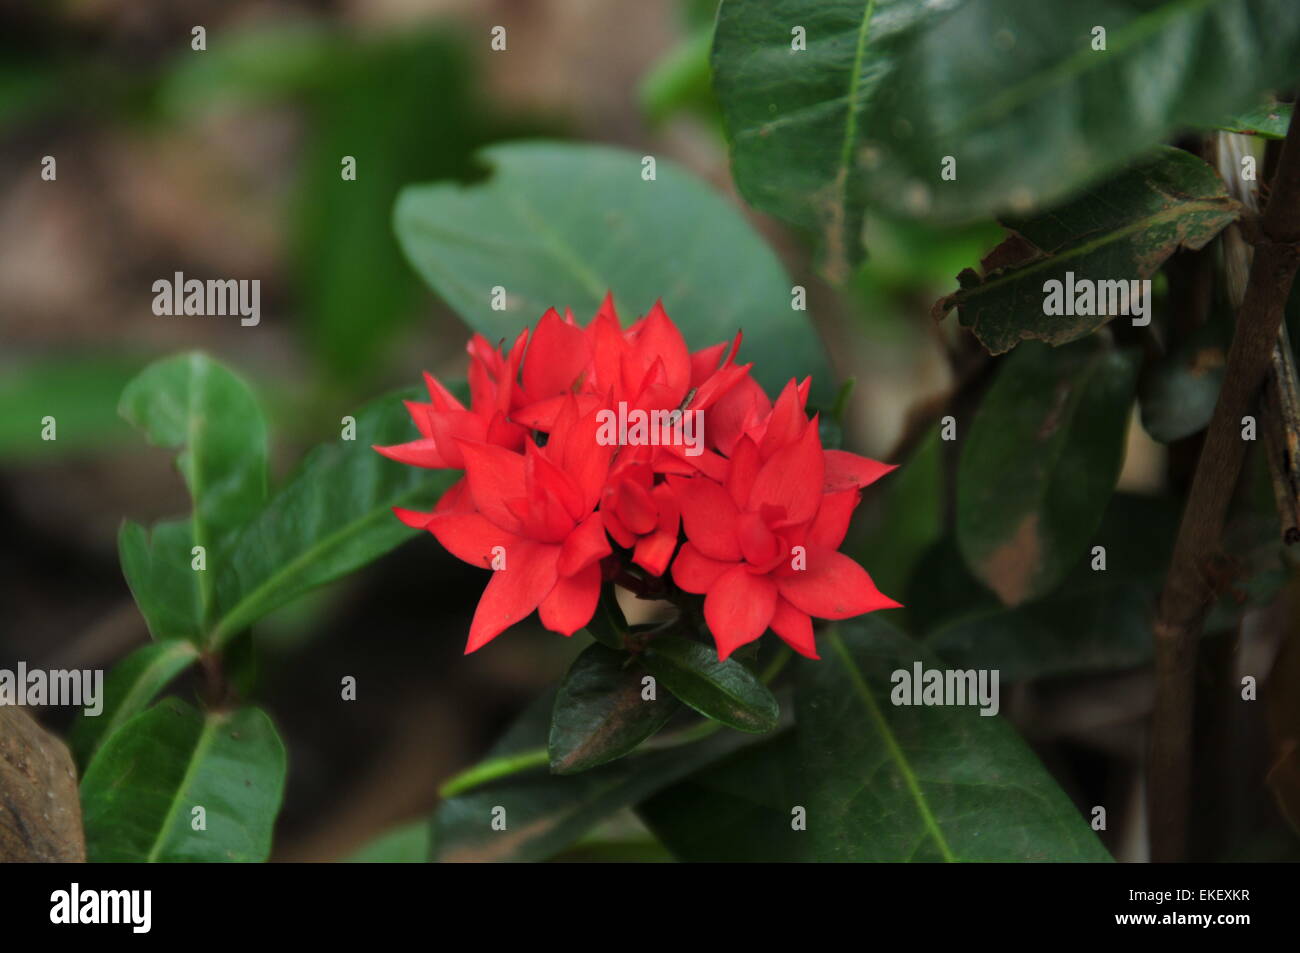 kerala flower stock photos & kerala flower stock images - alamy